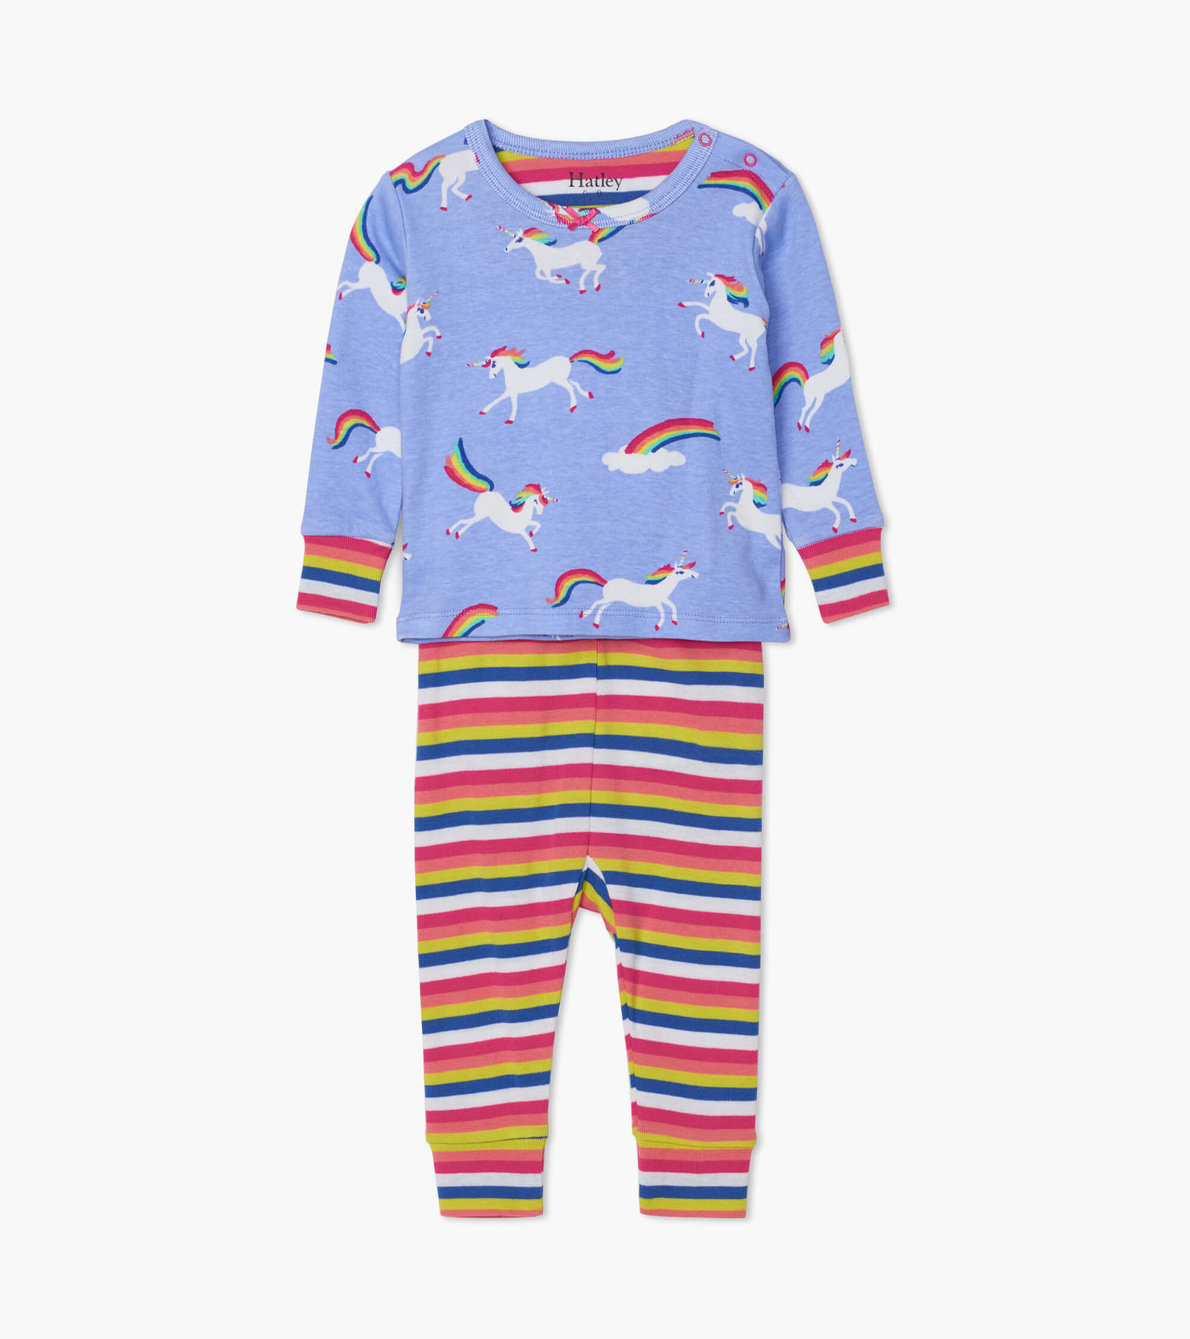 View larger image of Rainbow Unicorns Organic Cotton Baby Pajama Set